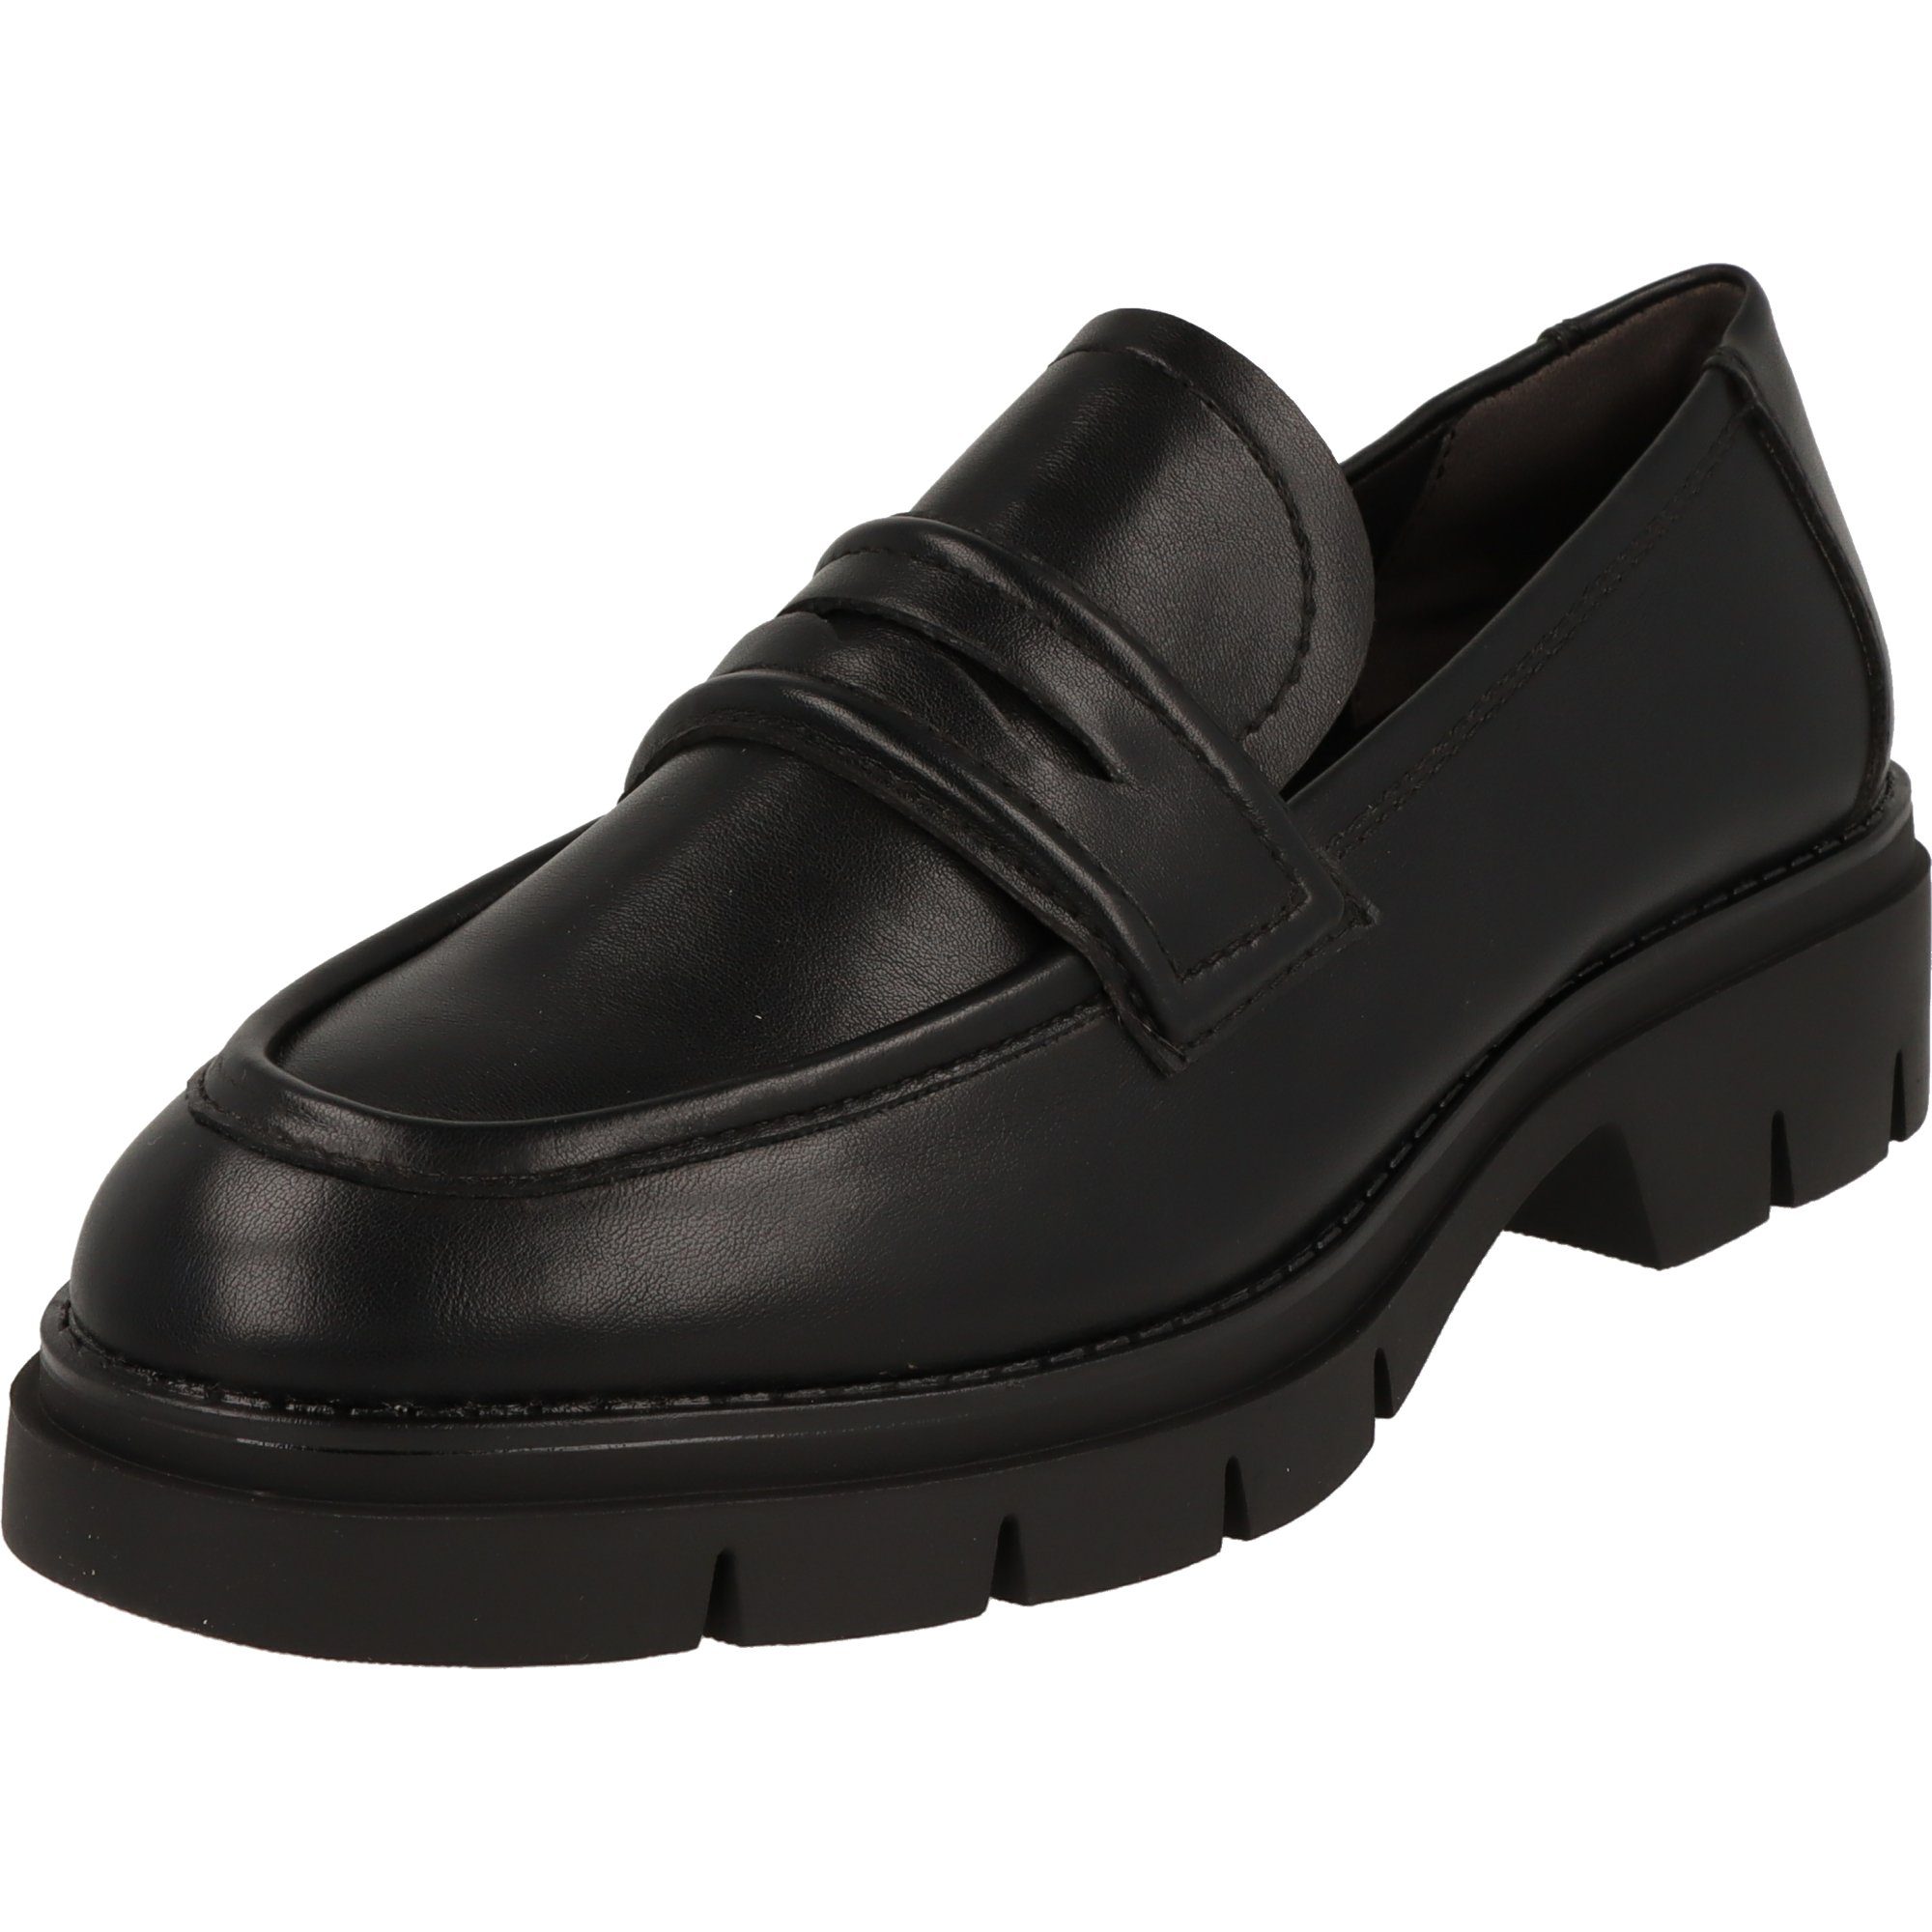 Tamaris Damen Schuhe Komfort Halbschuhe Slipper 1-24313-41 Loafer Vegan Black Matt